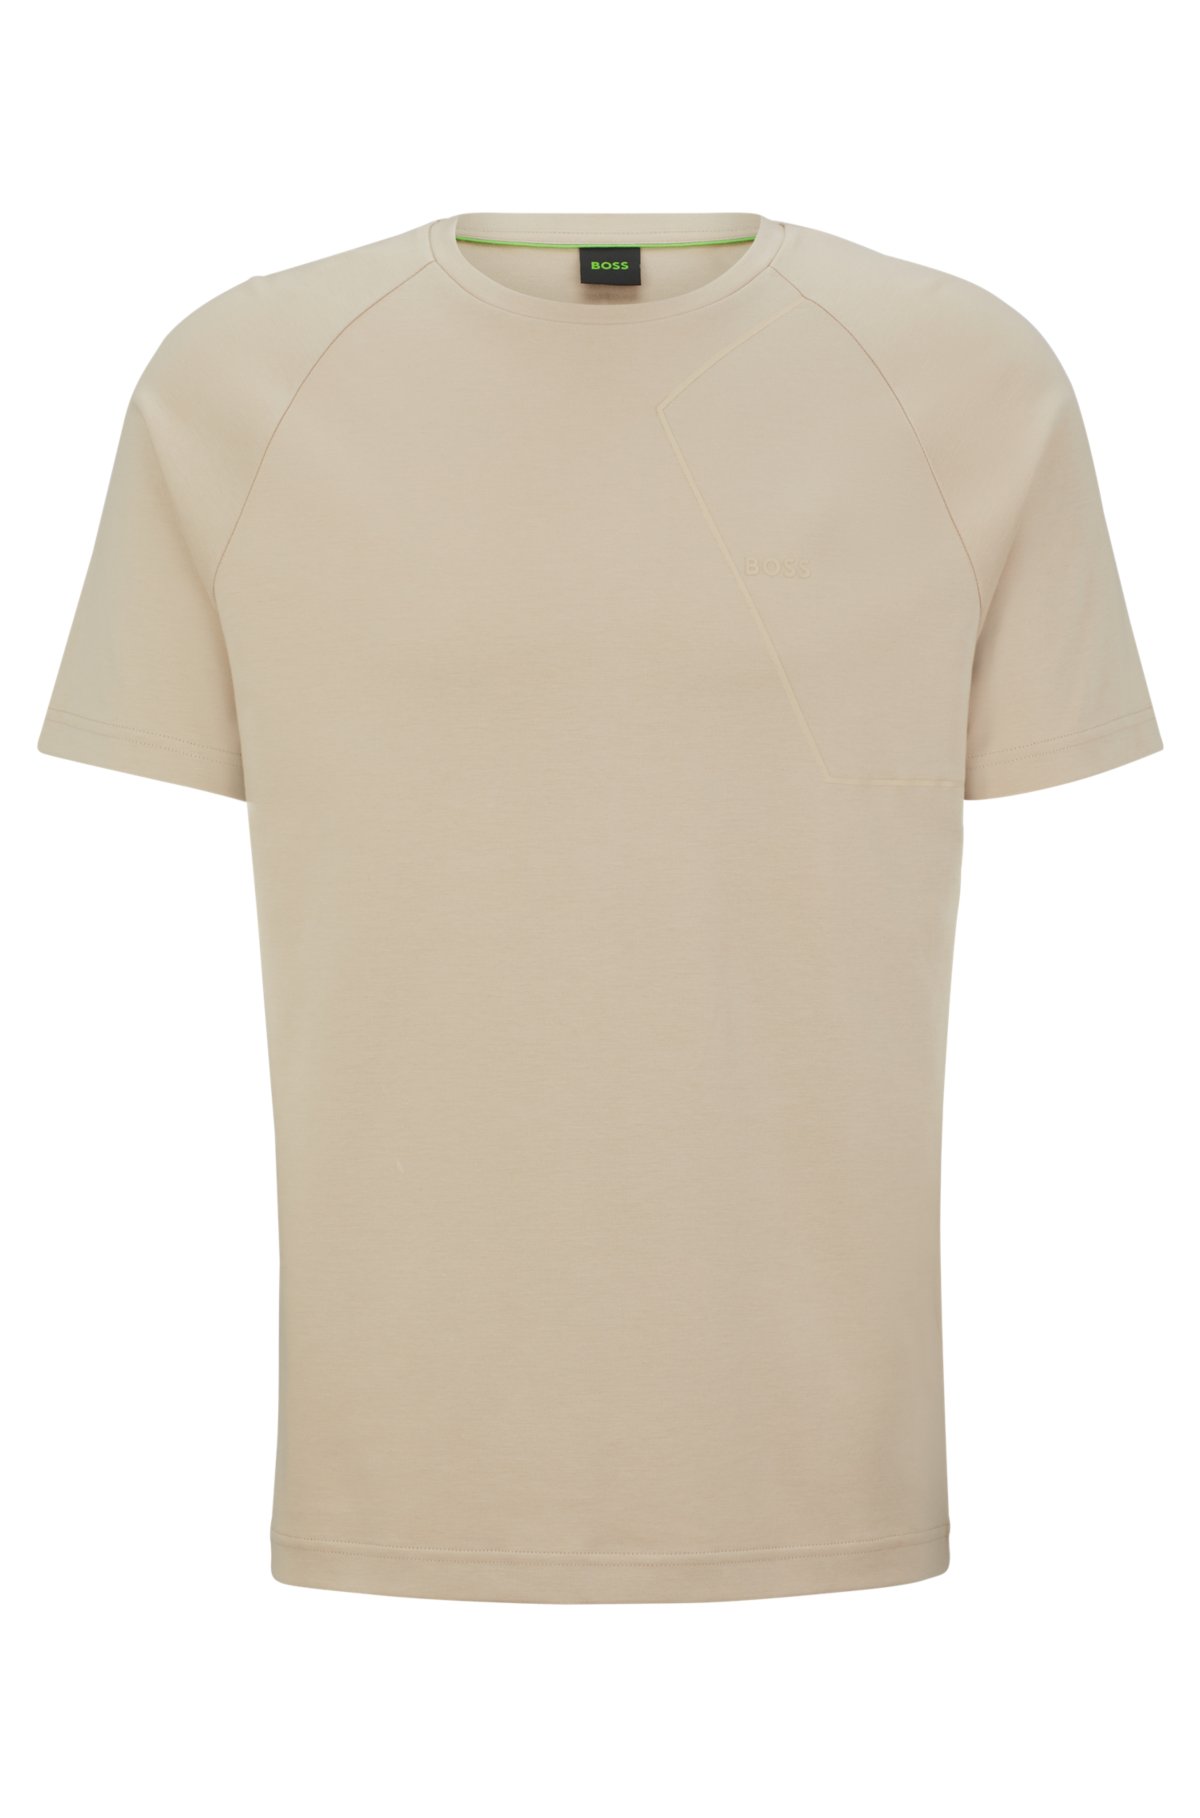 BOSS - Peppermint-finish cotton T-shirt artwork gloss-print with